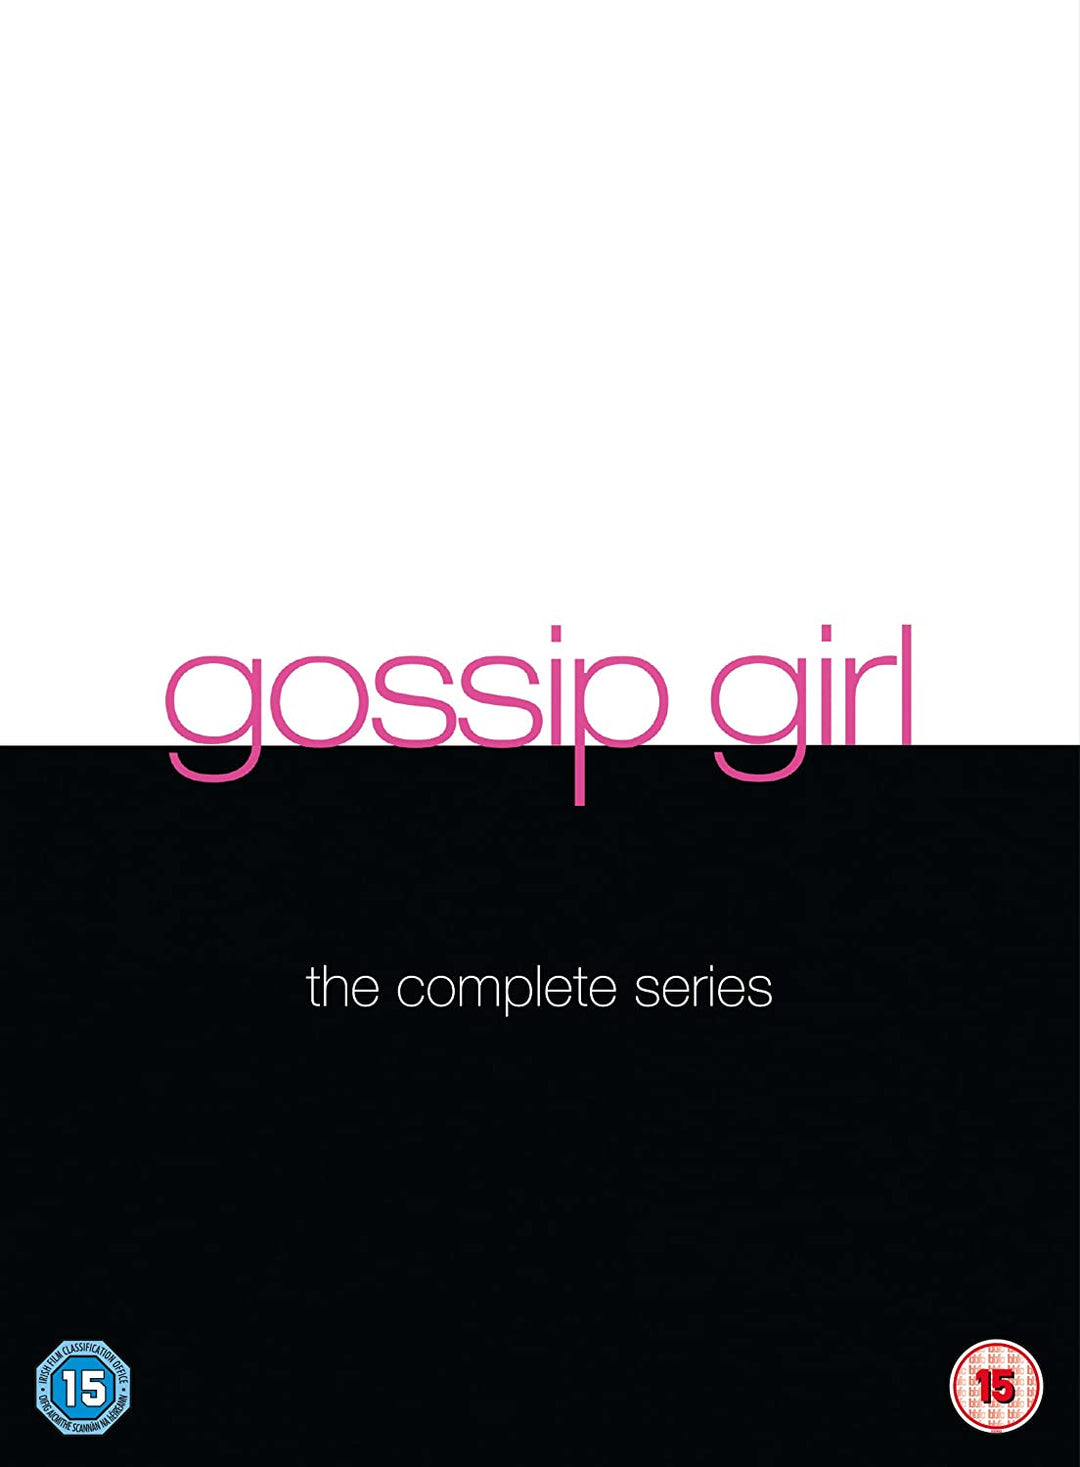 Gossip Girl - The Complete Series 1-6 - Drama [DVD]